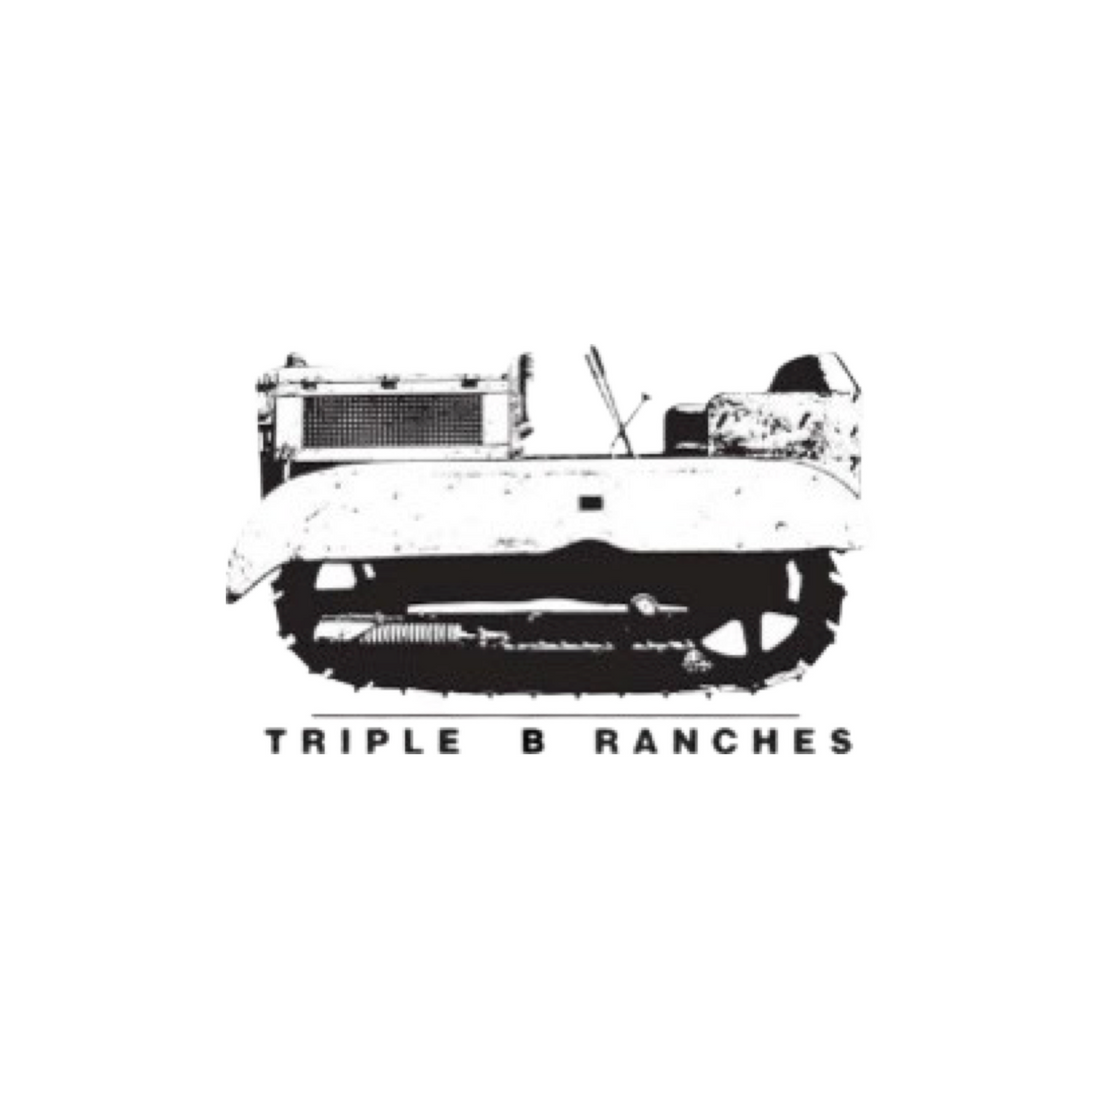 Triple B Ranches | Marsanne | 2016 | San Diego County